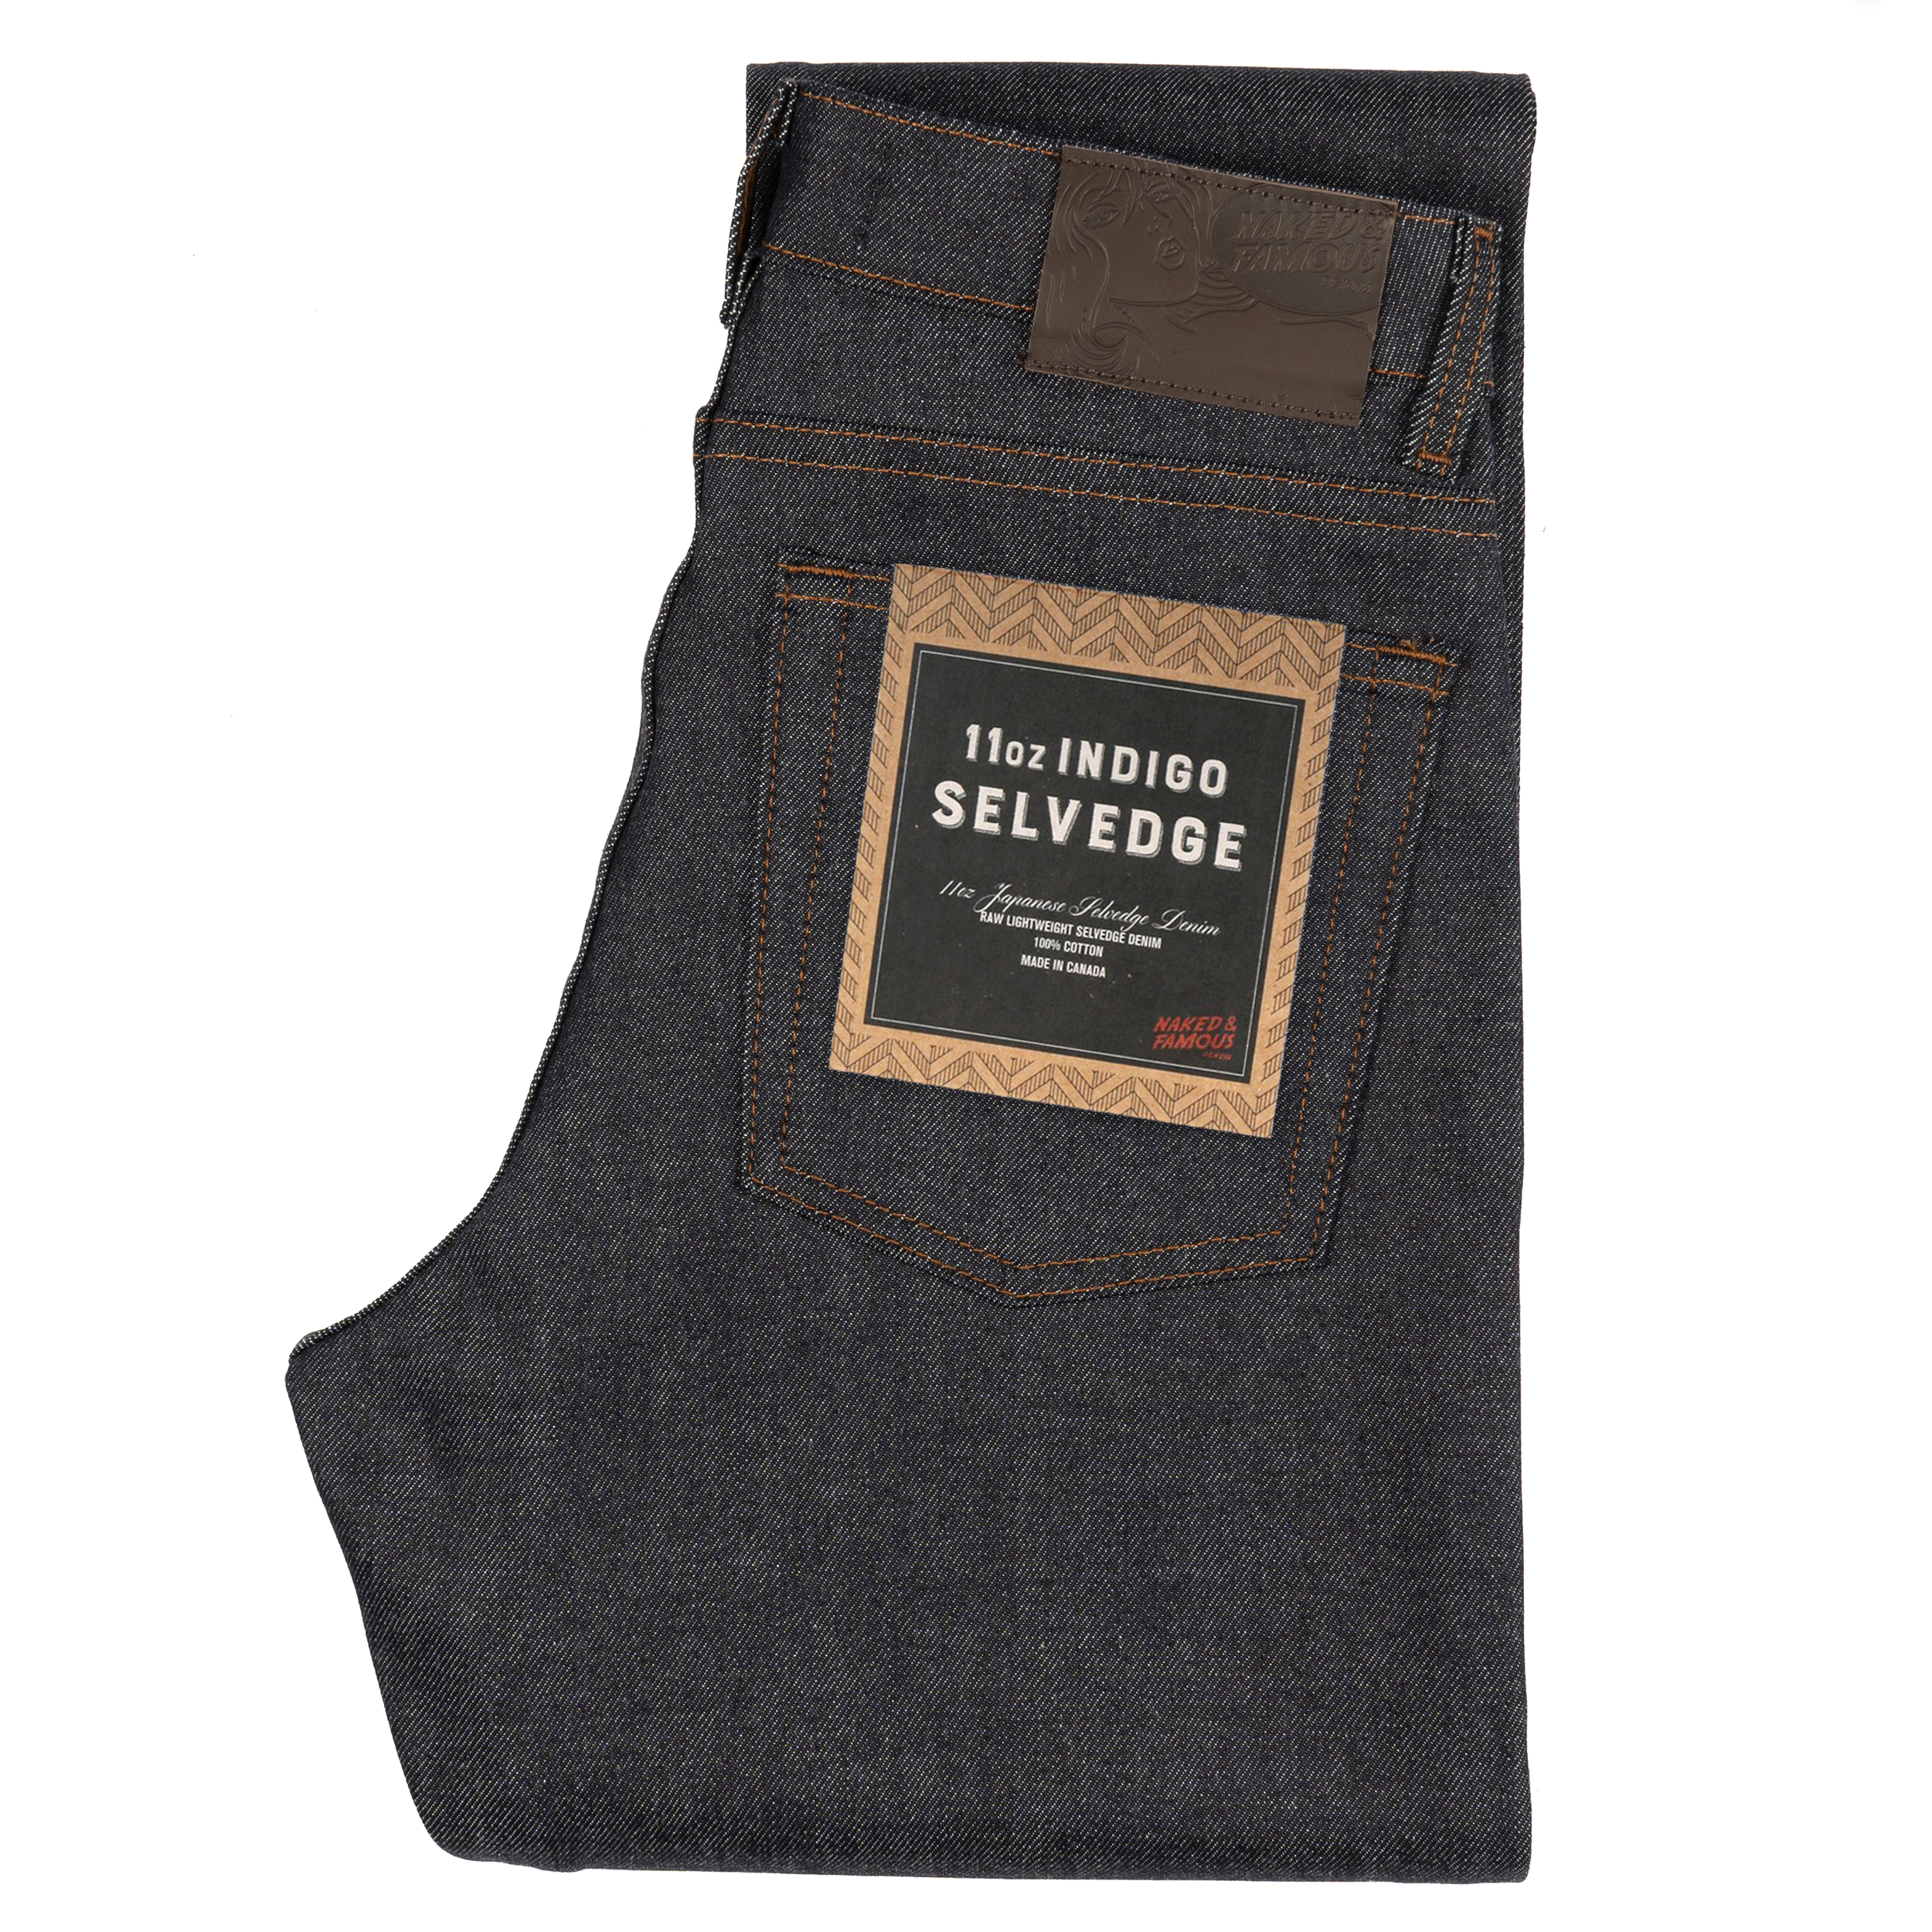  Women’s 11oz Indigo Selvedge jeans - folded 